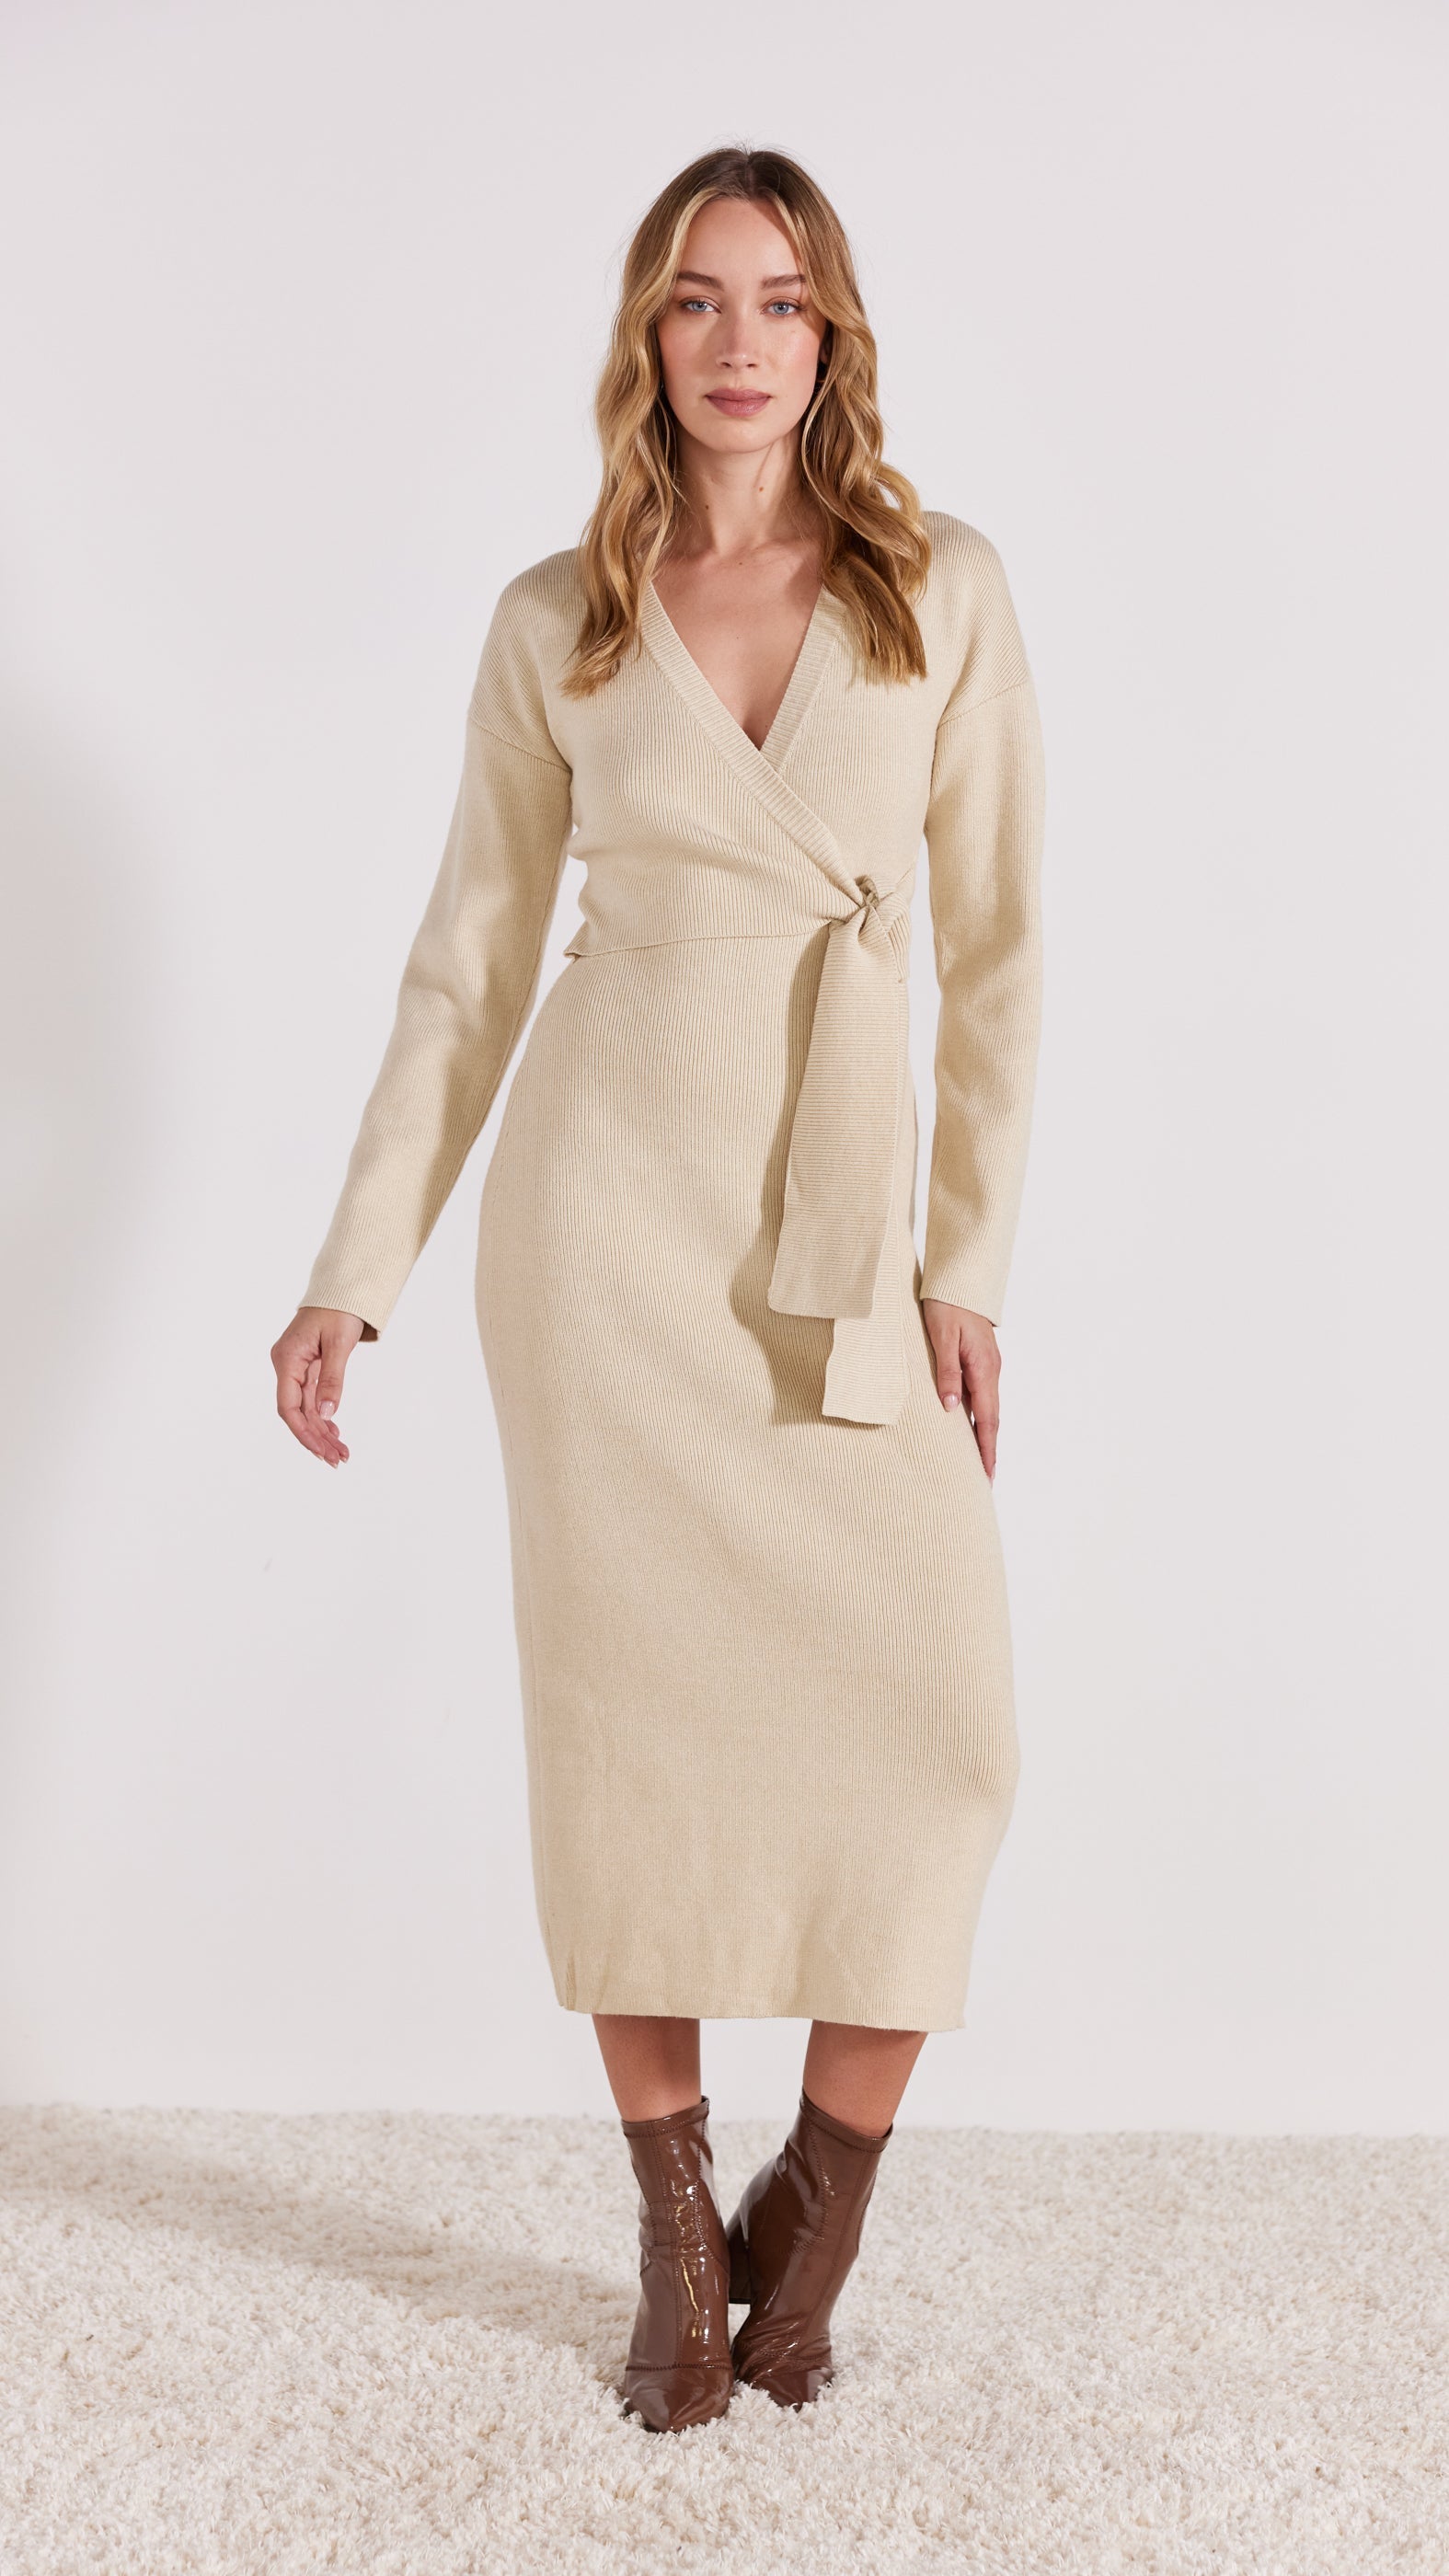 Olive & Oak Women’s Cream/Tan Ribbed V Neck Sweater Dress with Waist Tie  size XL